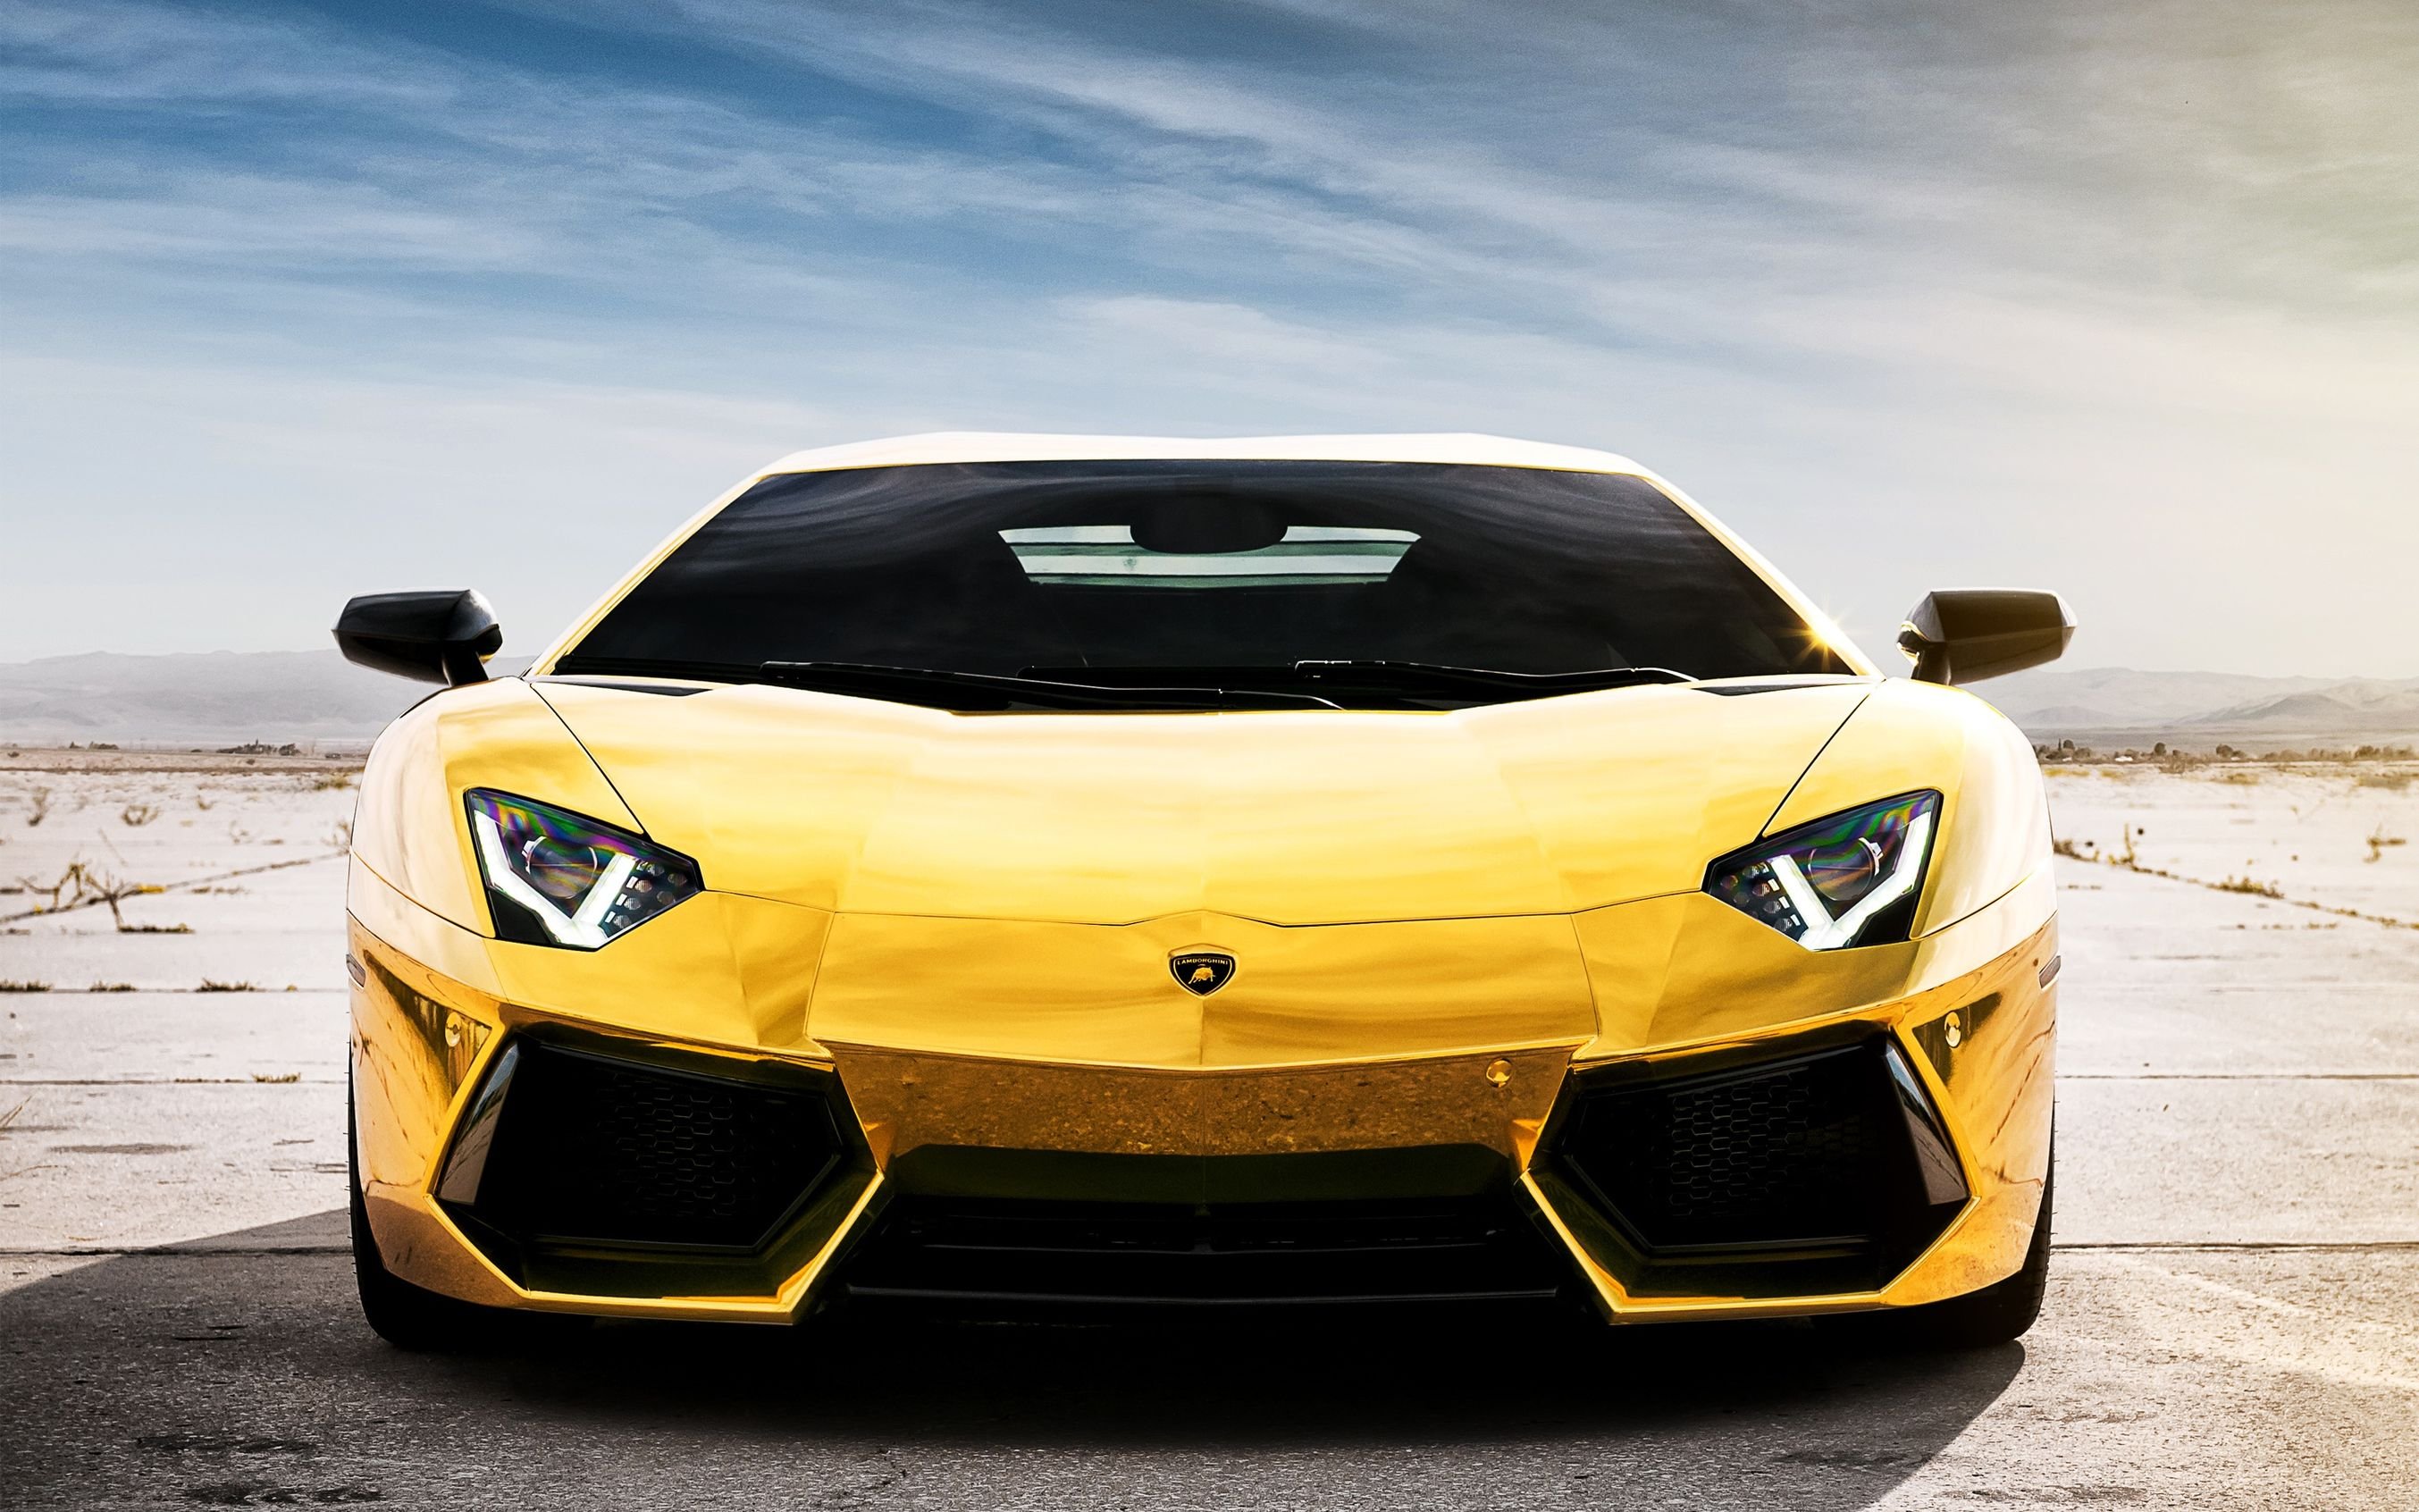 Фото на заставку телефона машины. Lamborghini Aventador lp700-4 Золотая. Lamborghini Aventador lp700-4 желтый. Ламборгини авентадор LP 700-4 желтый. Золотой Lamborghini авентадор.